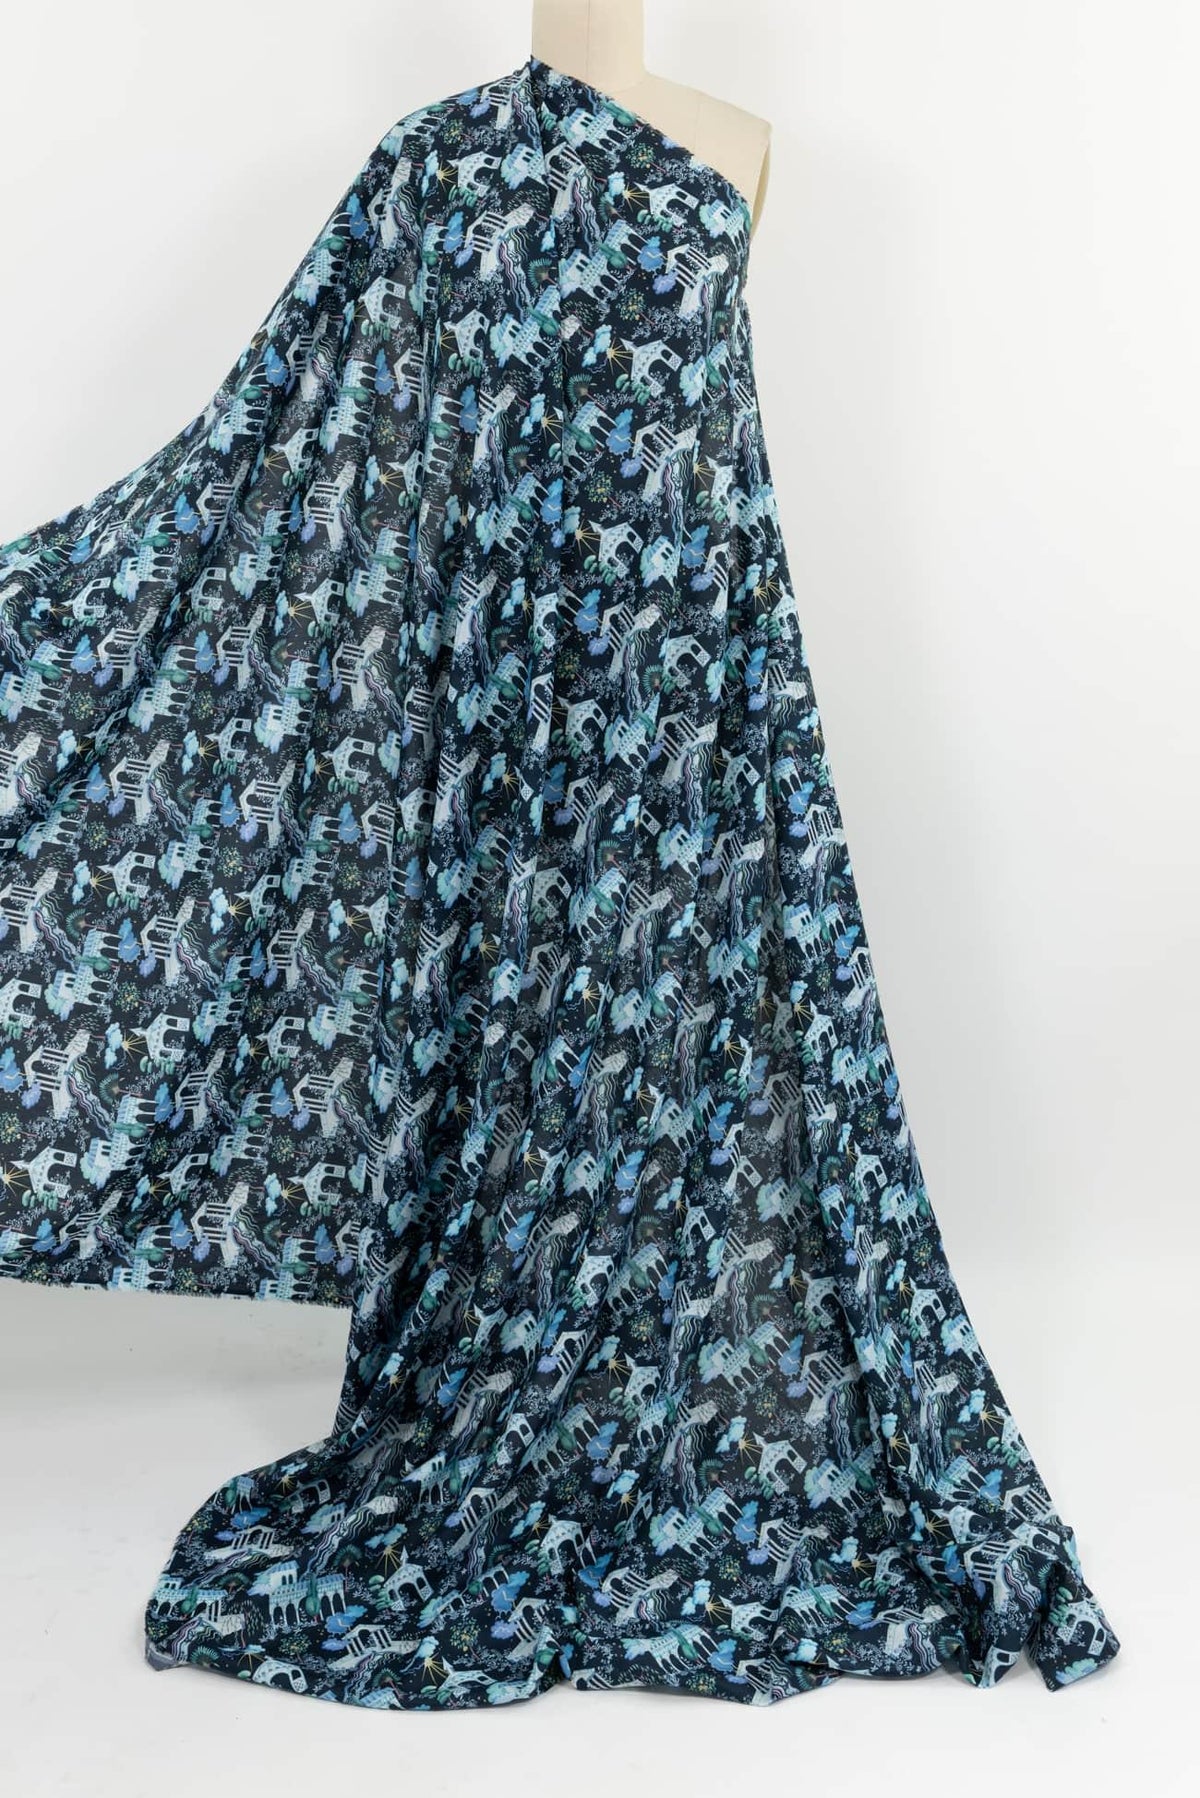 Camelot Liberty Cotton Woven - Marcy Tilton Fabrics